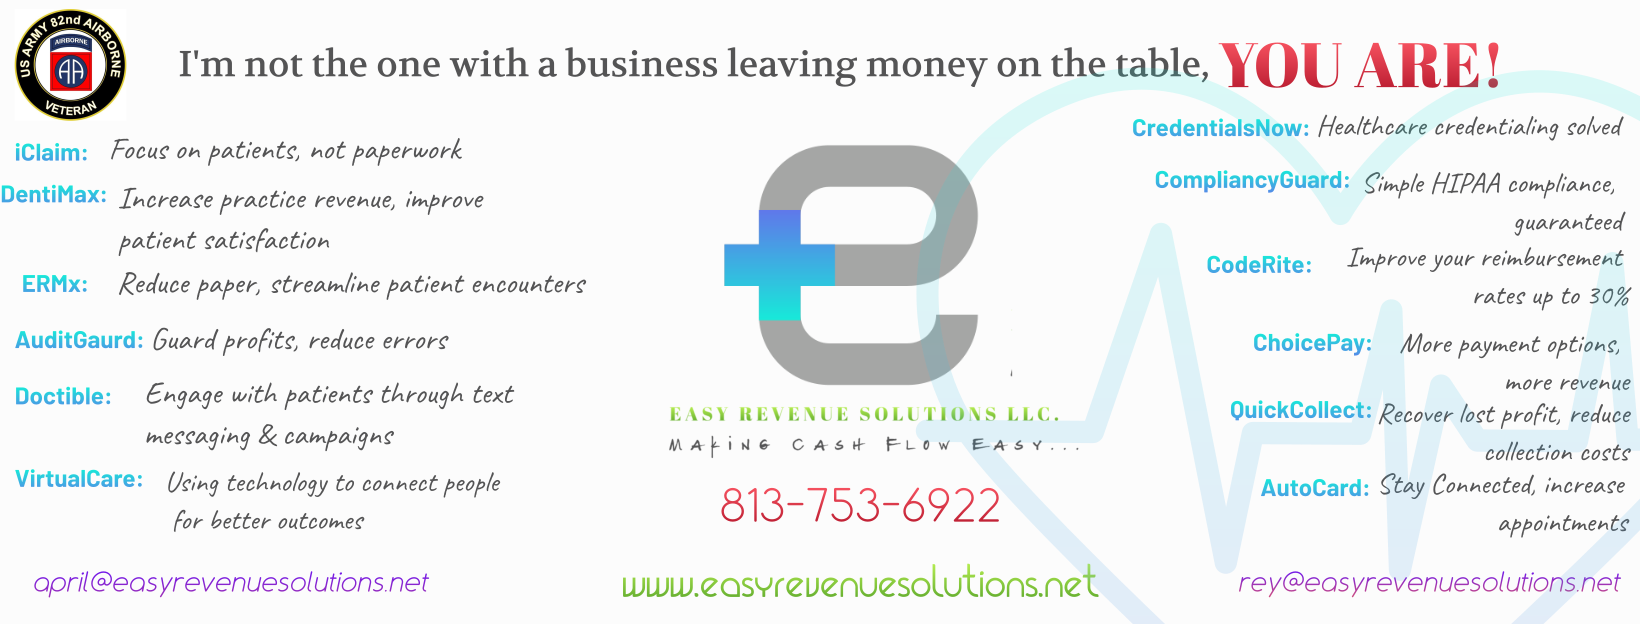 Easy Revenue Solutions – April Campo